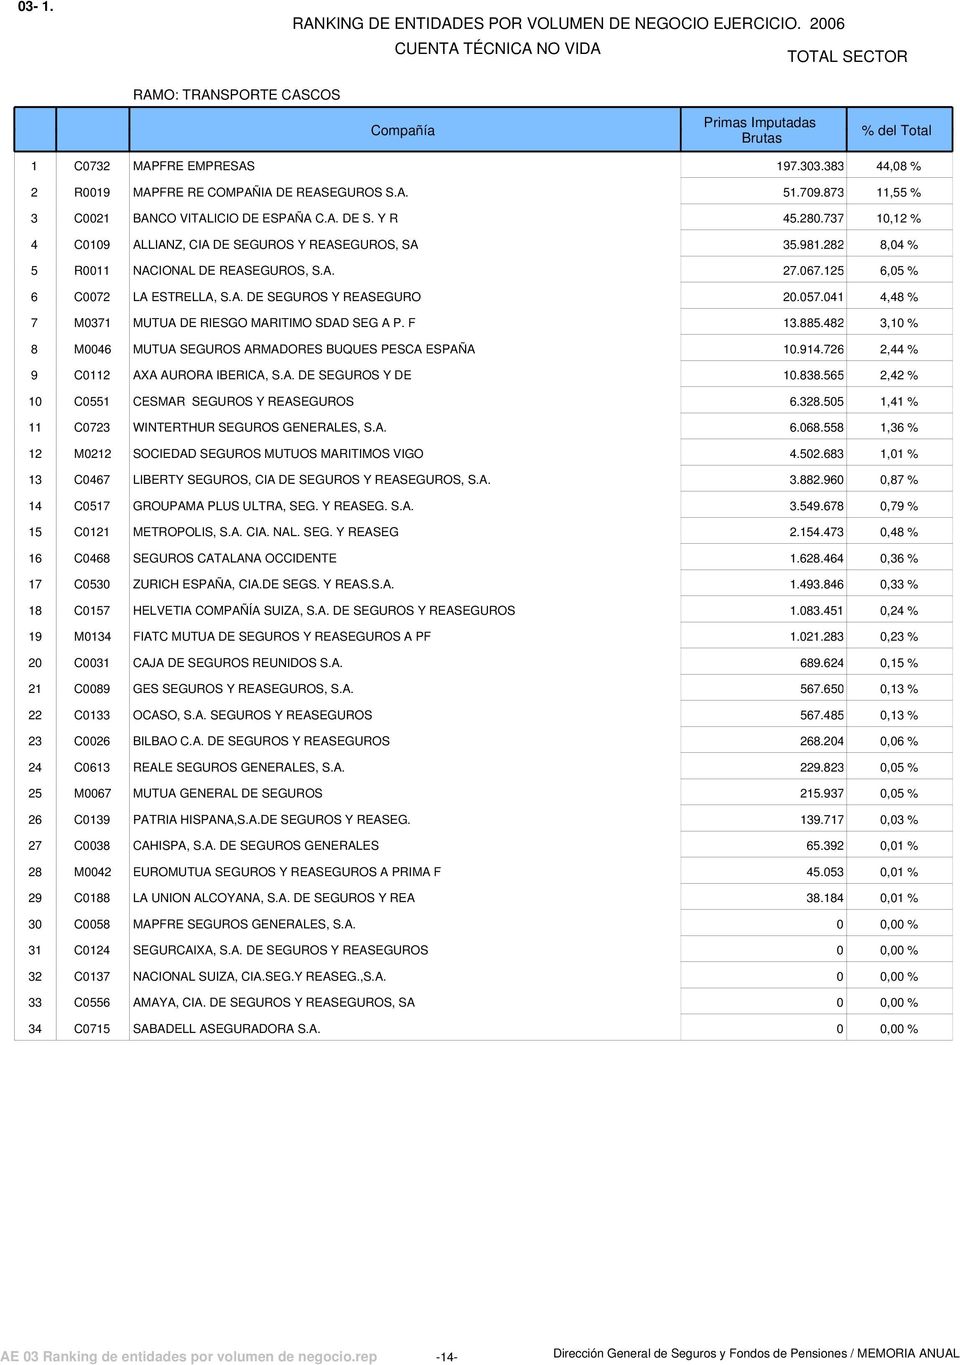 041 4,48 % 7 M0371 MUTUA DE RIESGO MARITIMO SDAD SEG A P. F 13.885.482 3,10 % 8 M0046 MUTUA SEGUROS ARMADORES BUQUES PESCA ESPAÑA 10.914.726 2,44 % 9 C0112 AXA AURORA IBERICA, S.A. DE SEGUROS Y DE 10.